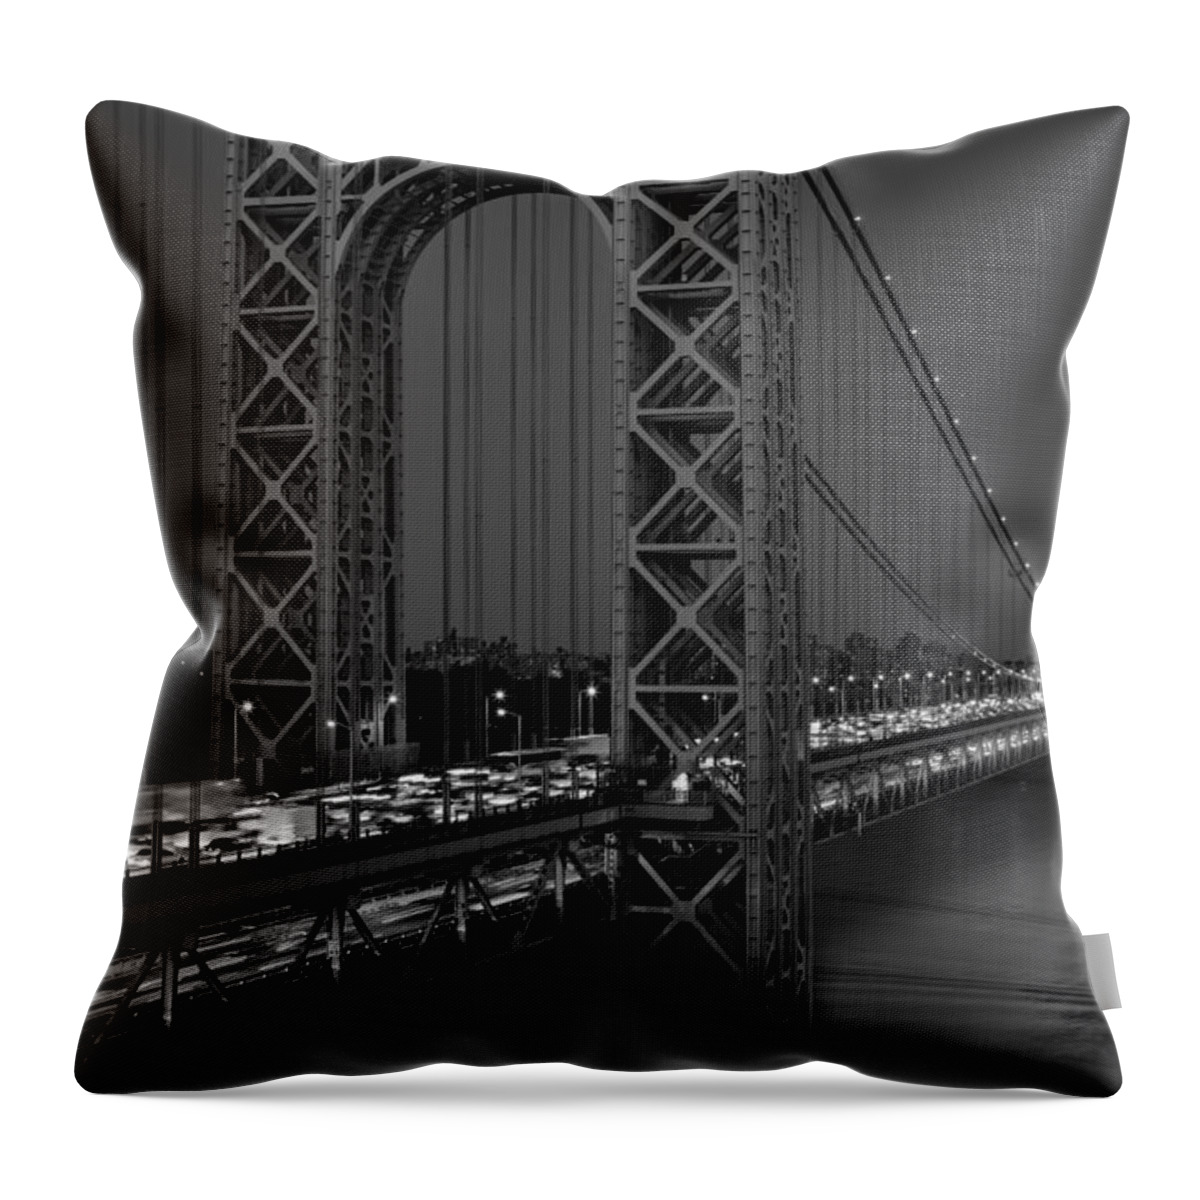 George Washington Bridge Throw Pillow featuring the photograph George Washington Bridge Moon Rise BW by Susan Candelario